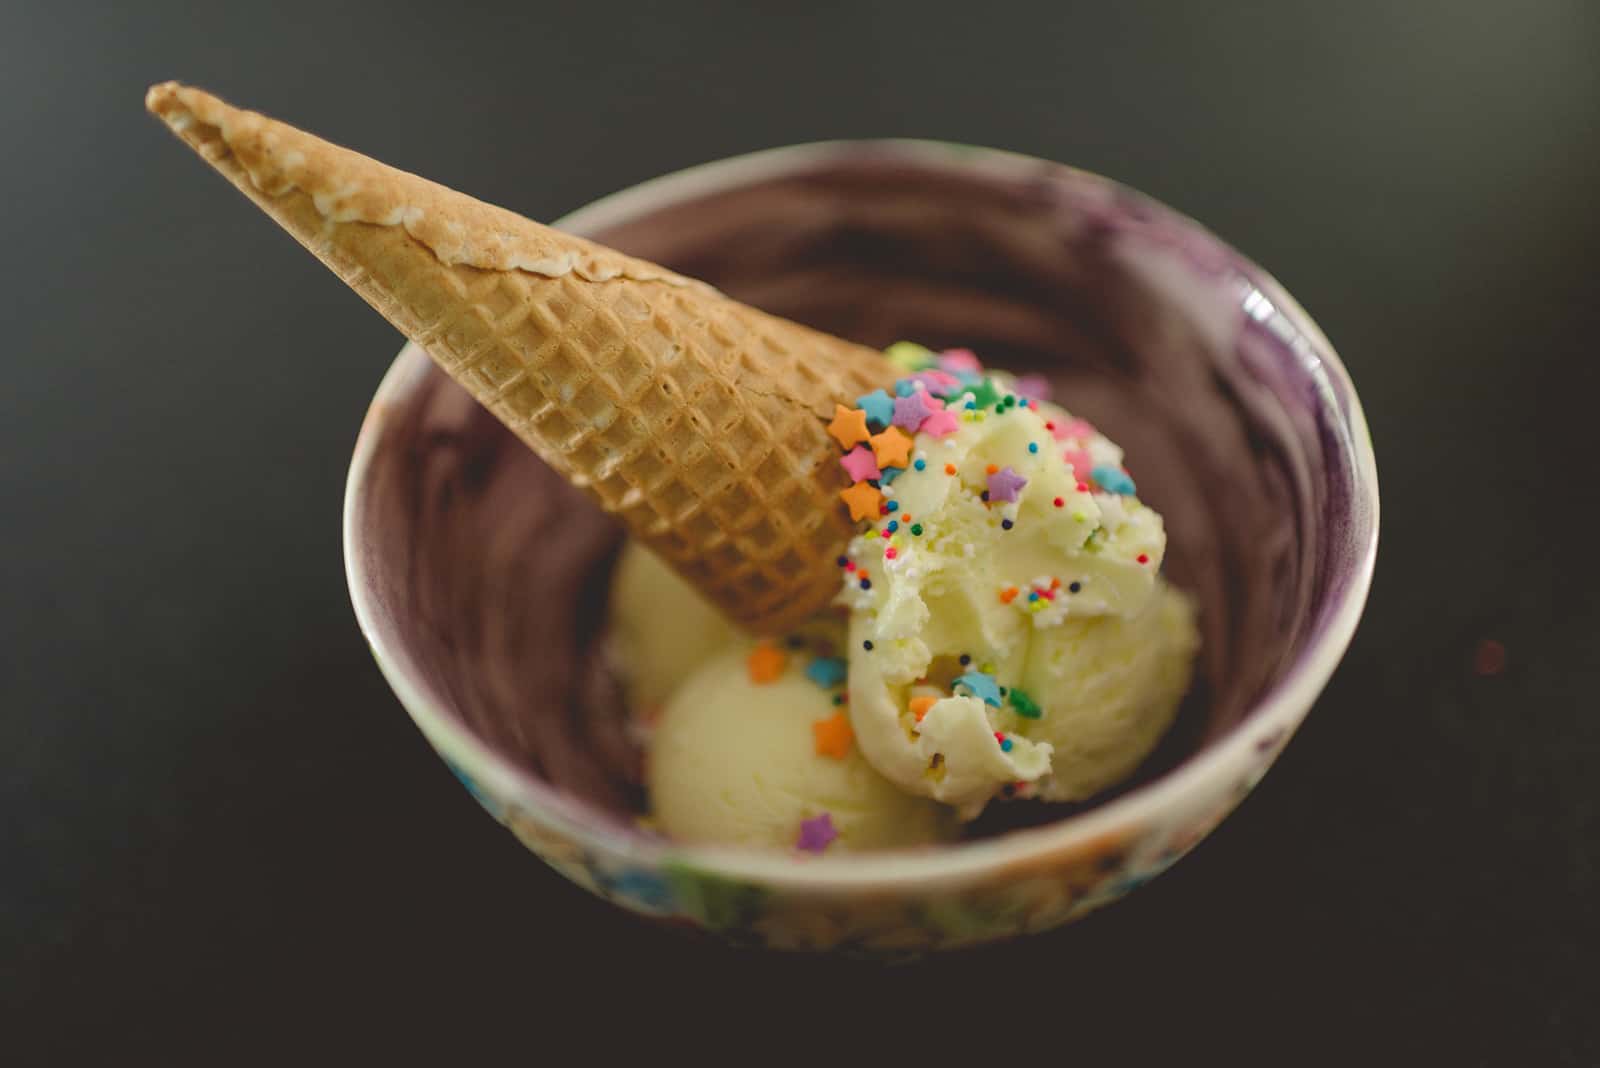 I Scream For Ice Cream by Tiffani Thiessen • Photography by Rebecca Sanabria